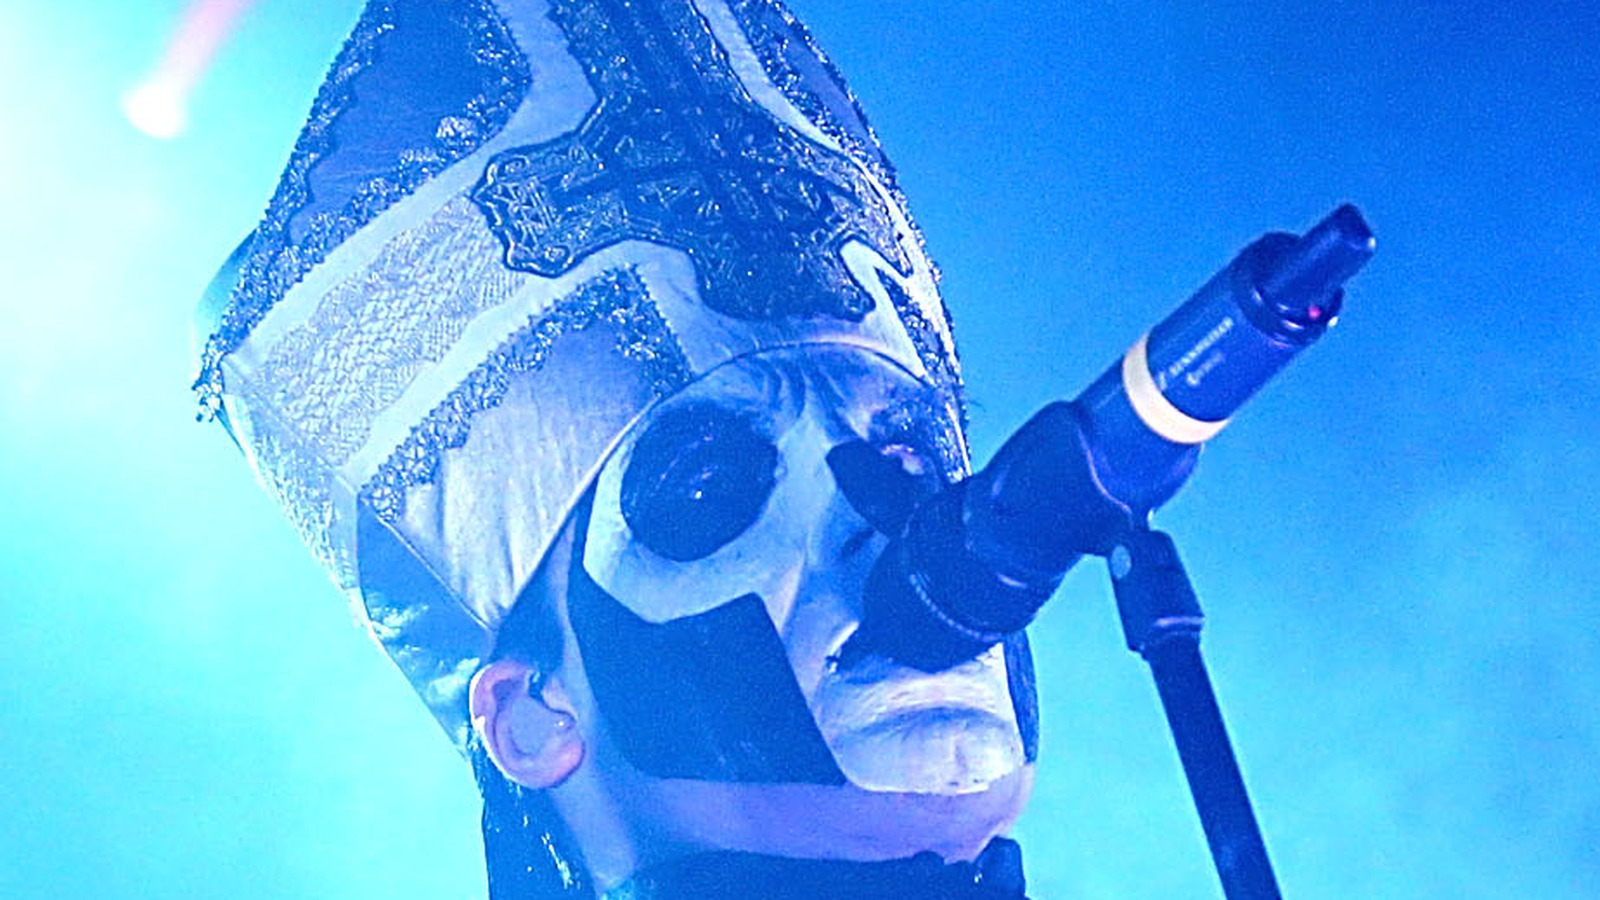 Swedish Metal Band Ghost Introduce New Leader Cardinal Copia